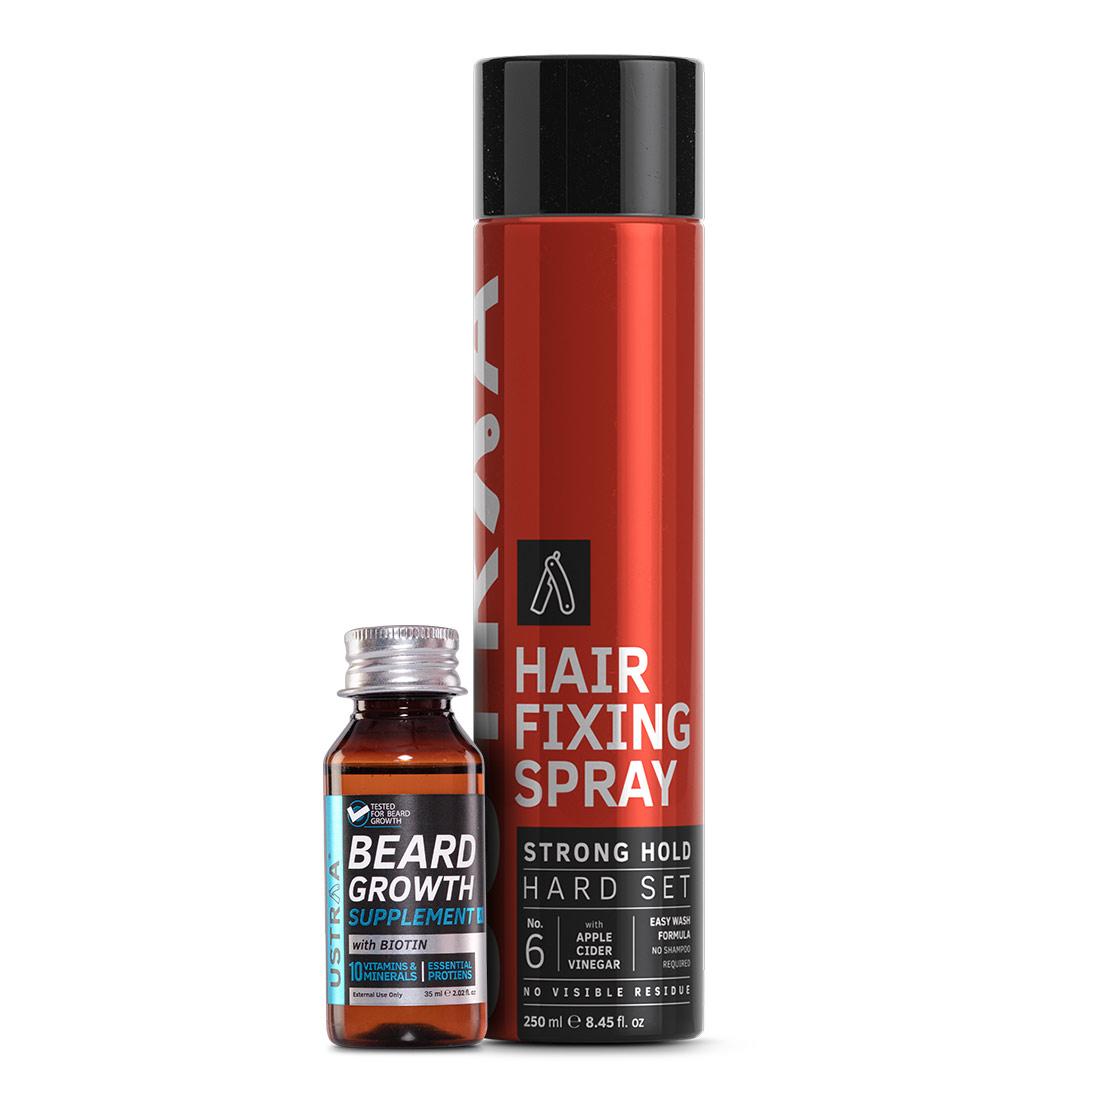 Beard Growth Supplement & Hair Fixing Spray